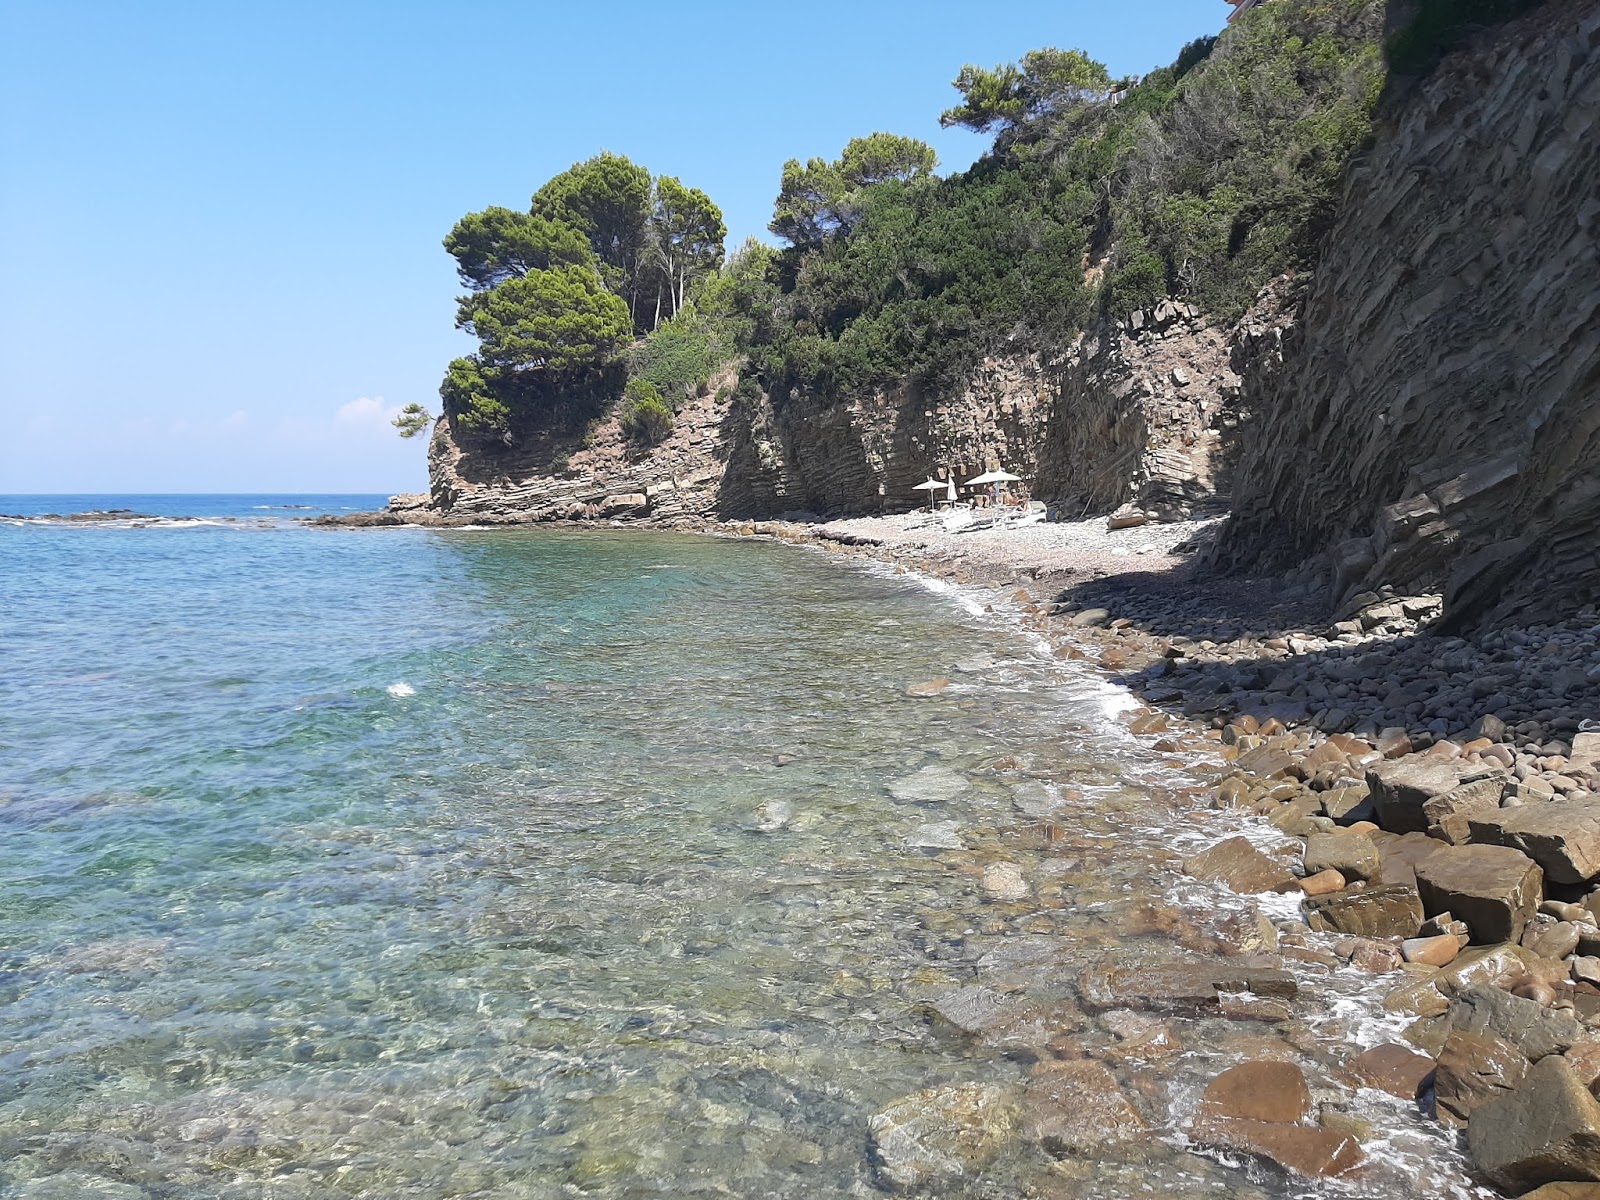 Photo of Spiaggia di via Vallonealto with gray pebble surface